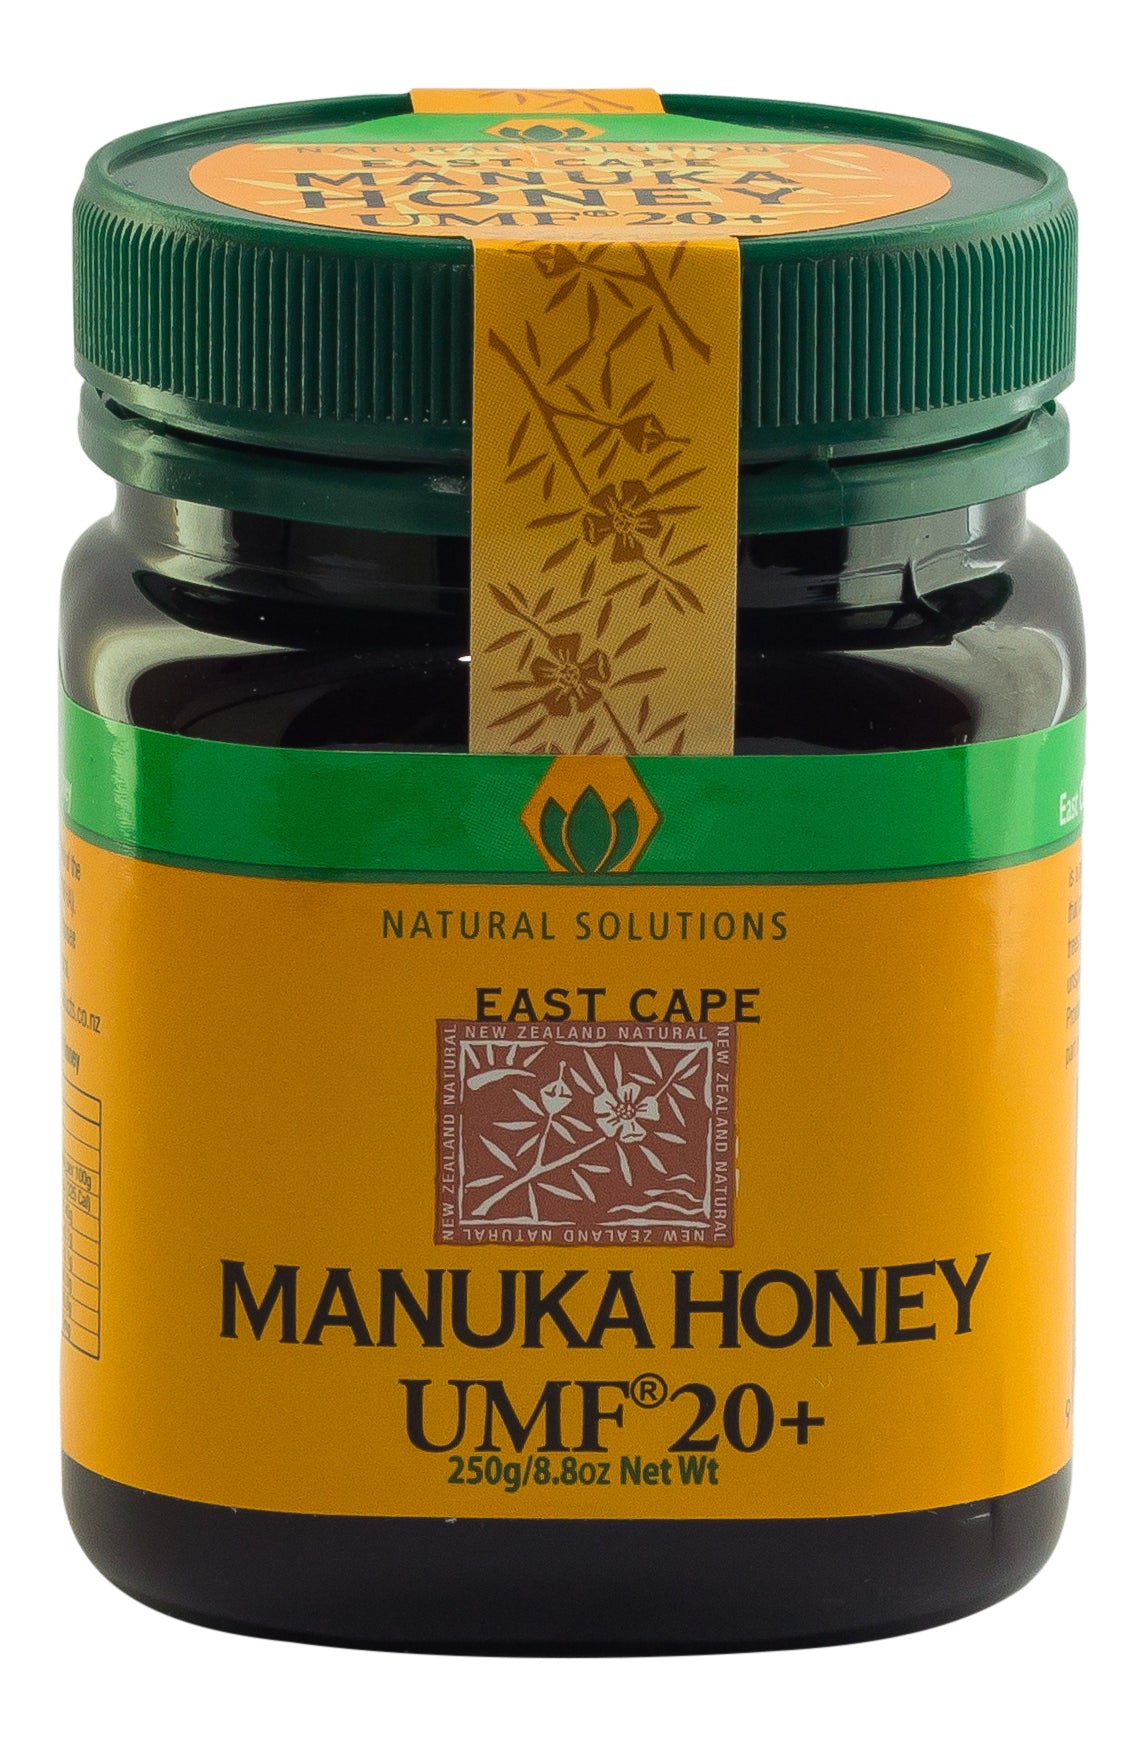 How to identify genuine Manuka honey